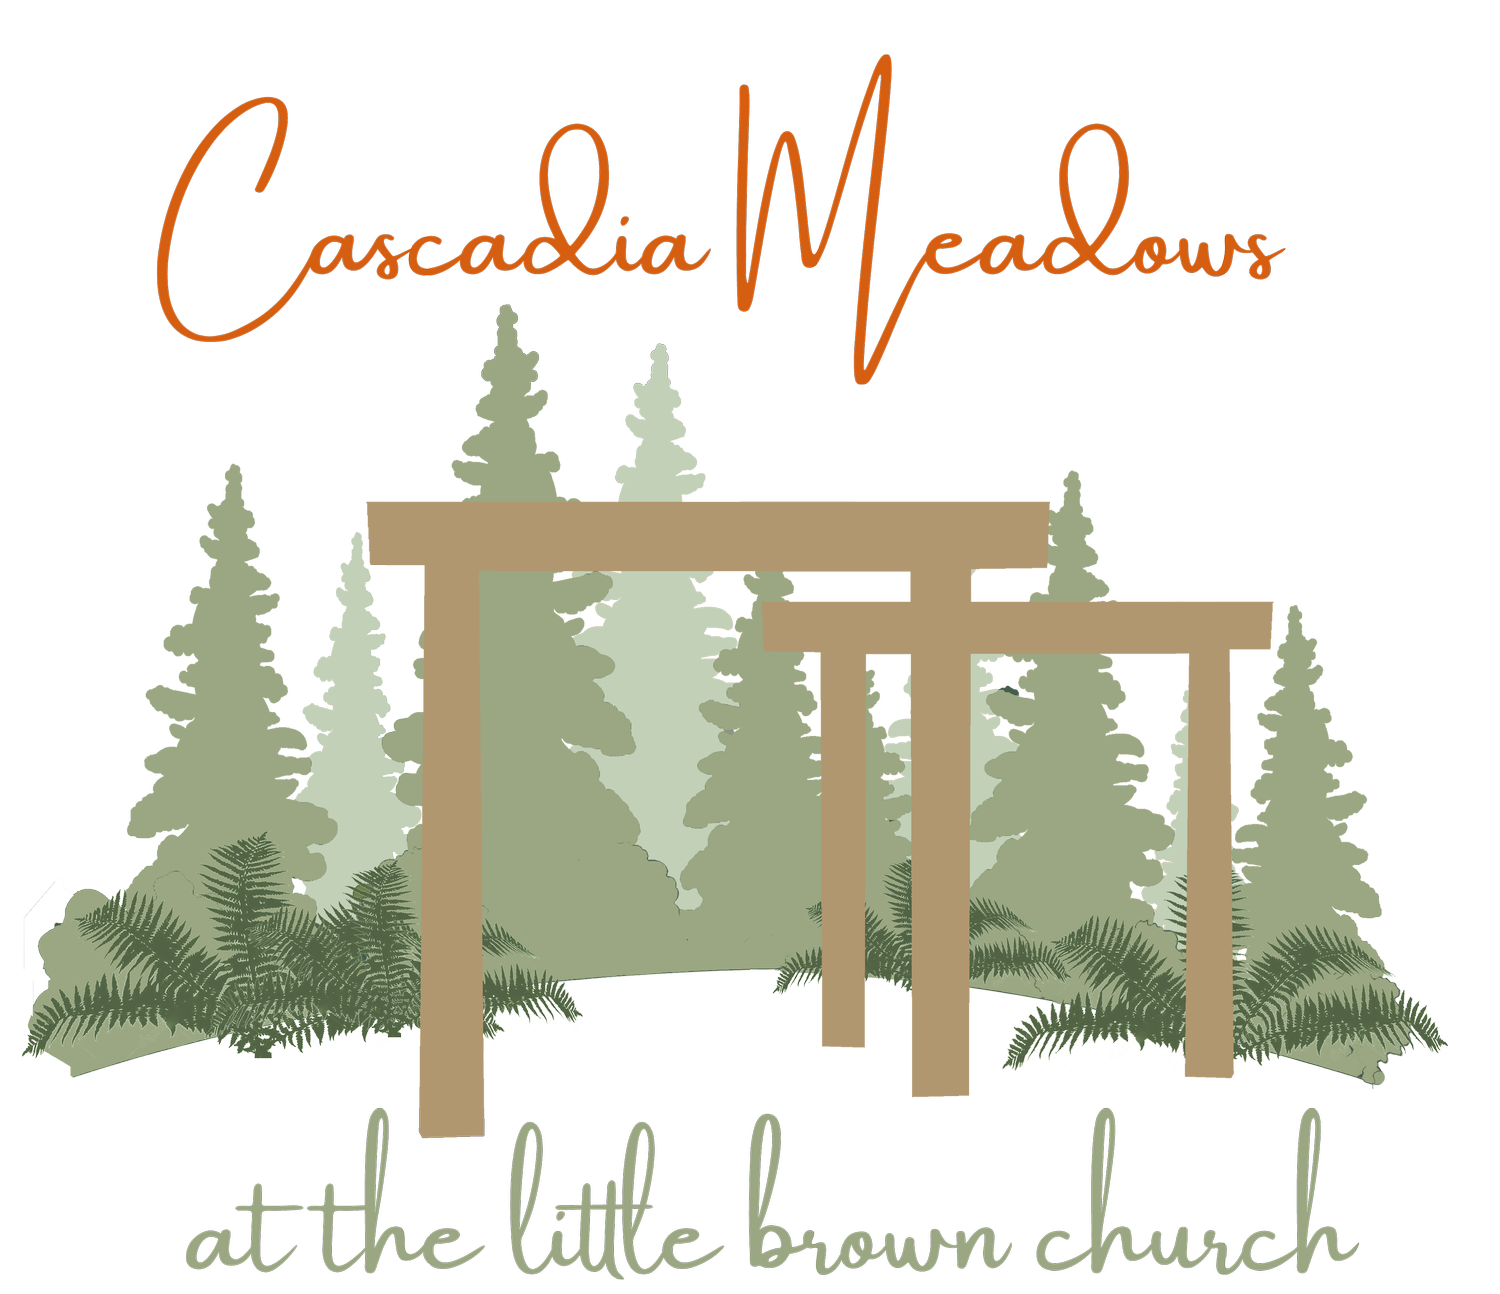 Cascadia Meadows